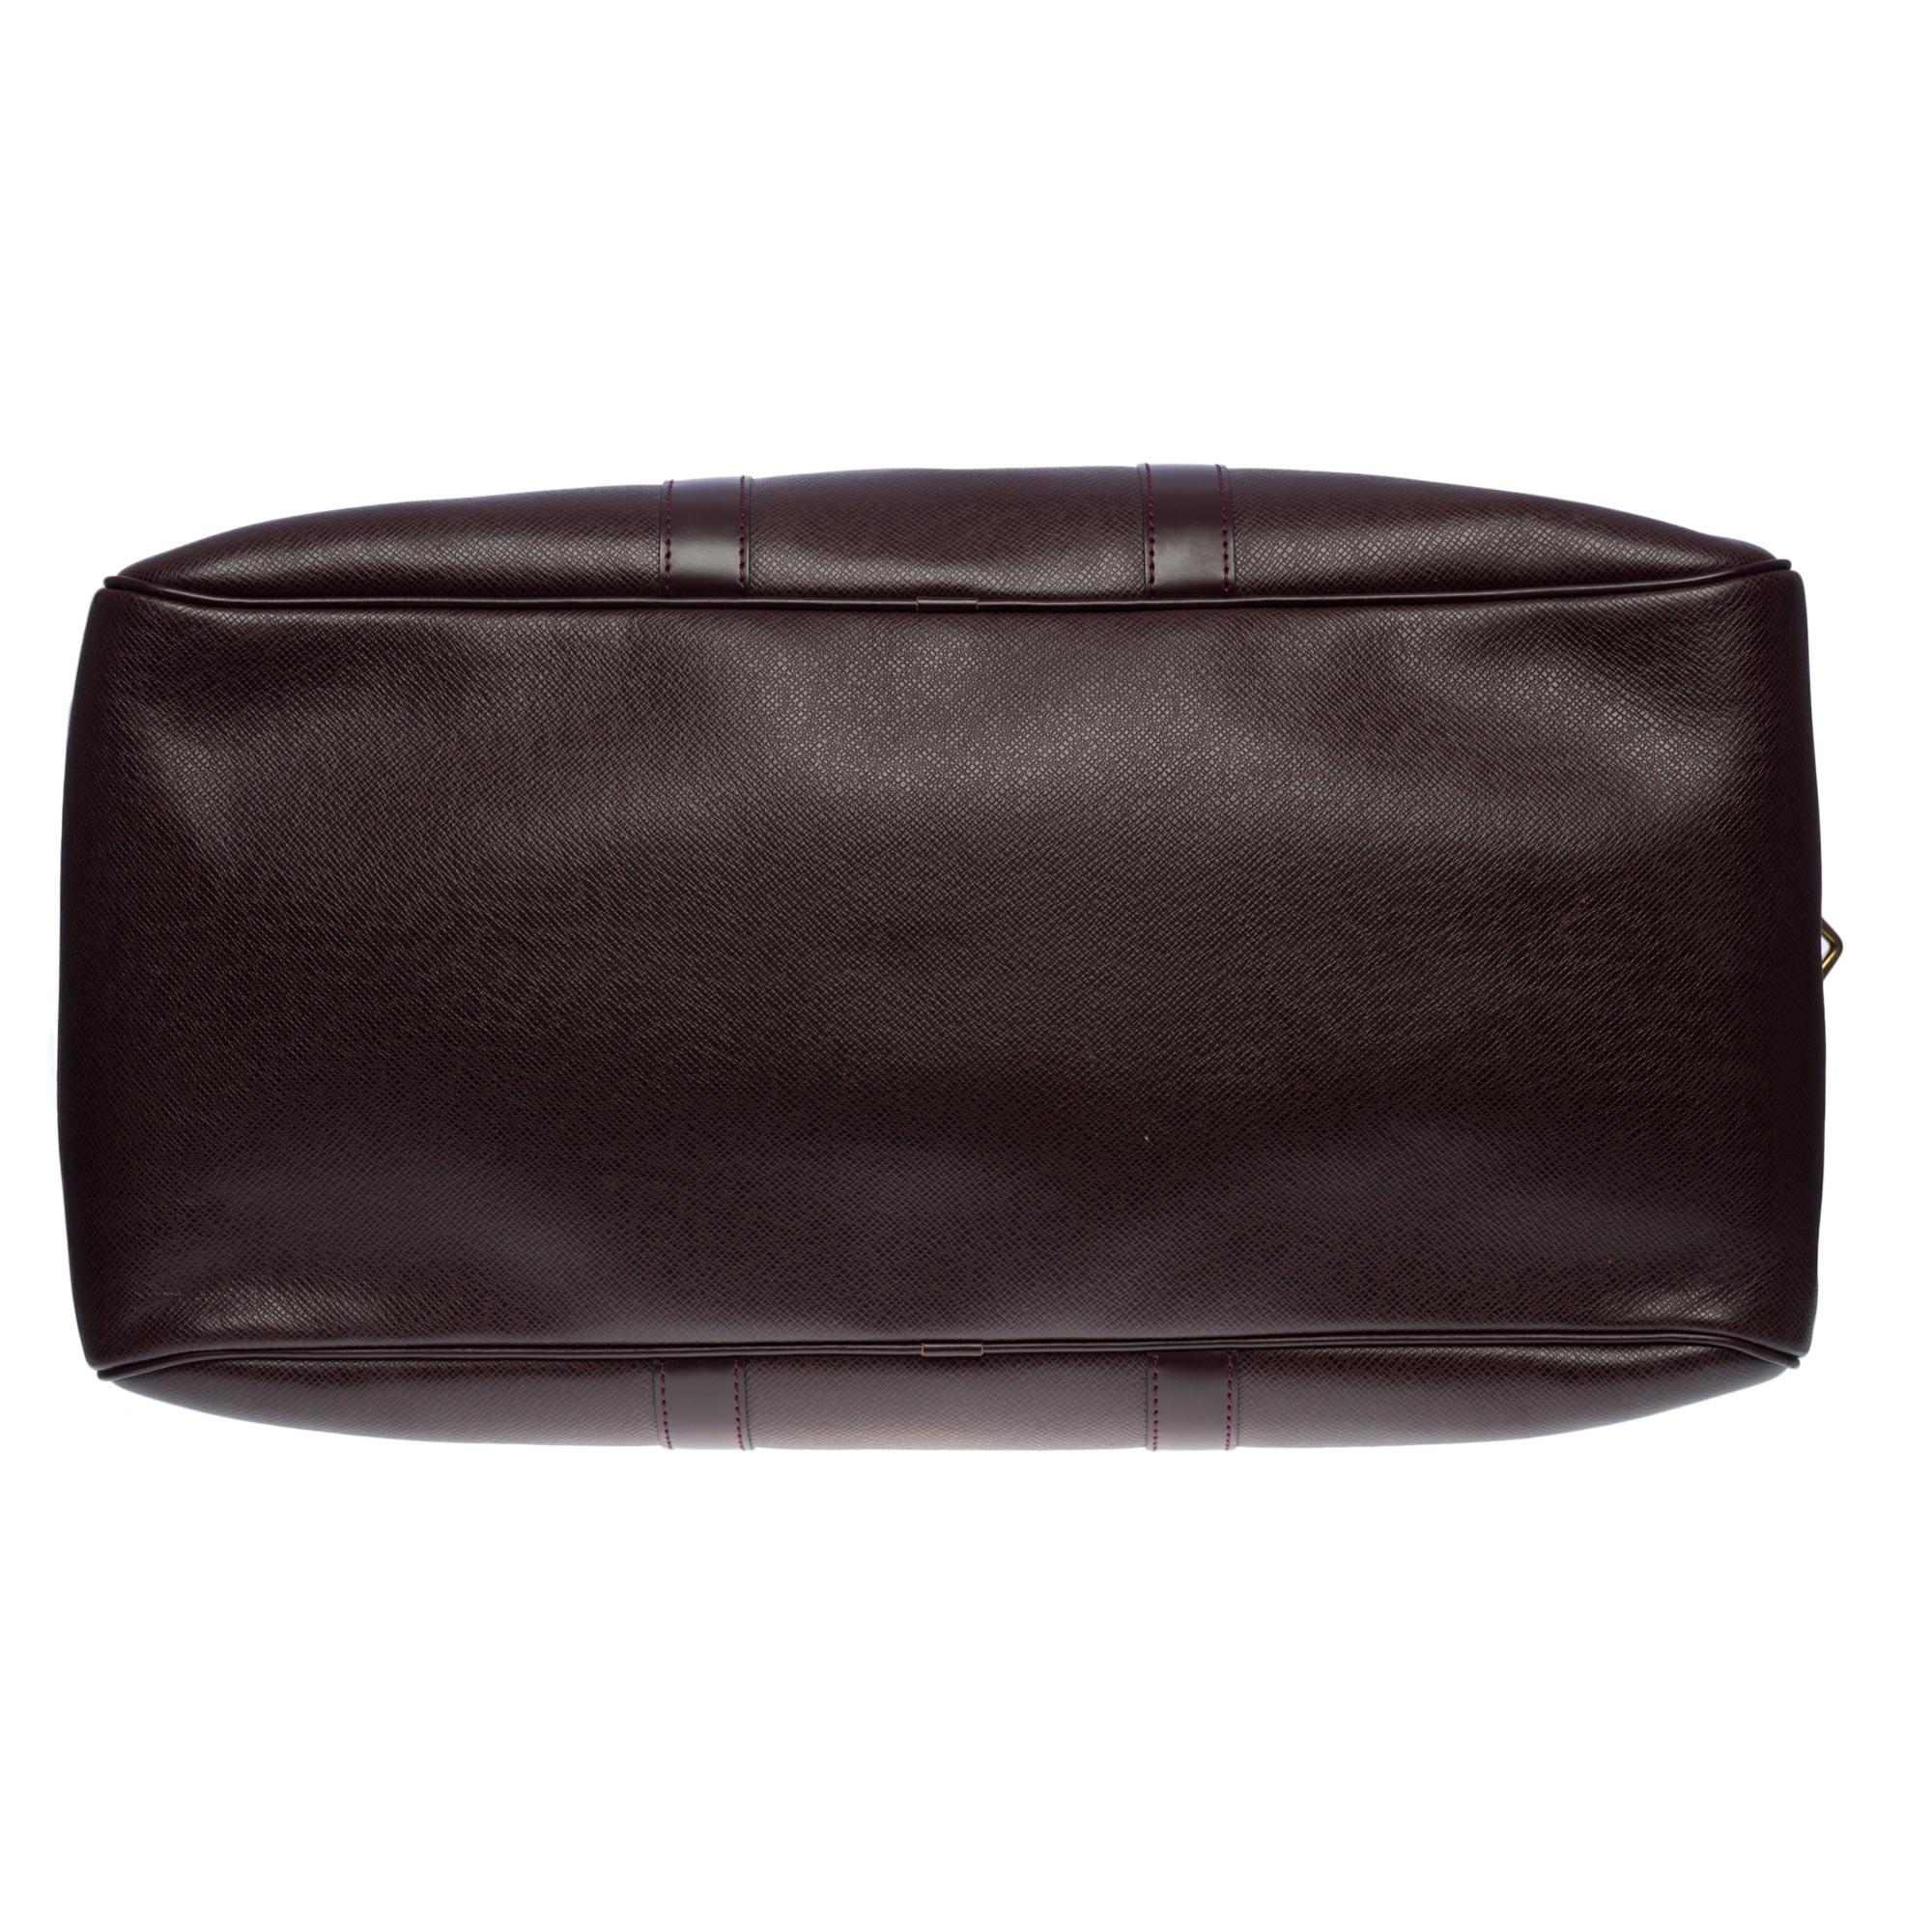 Rare Louis Vuitton Kendall strap Travel bag in Burgundy Taïga leather , GHW 3